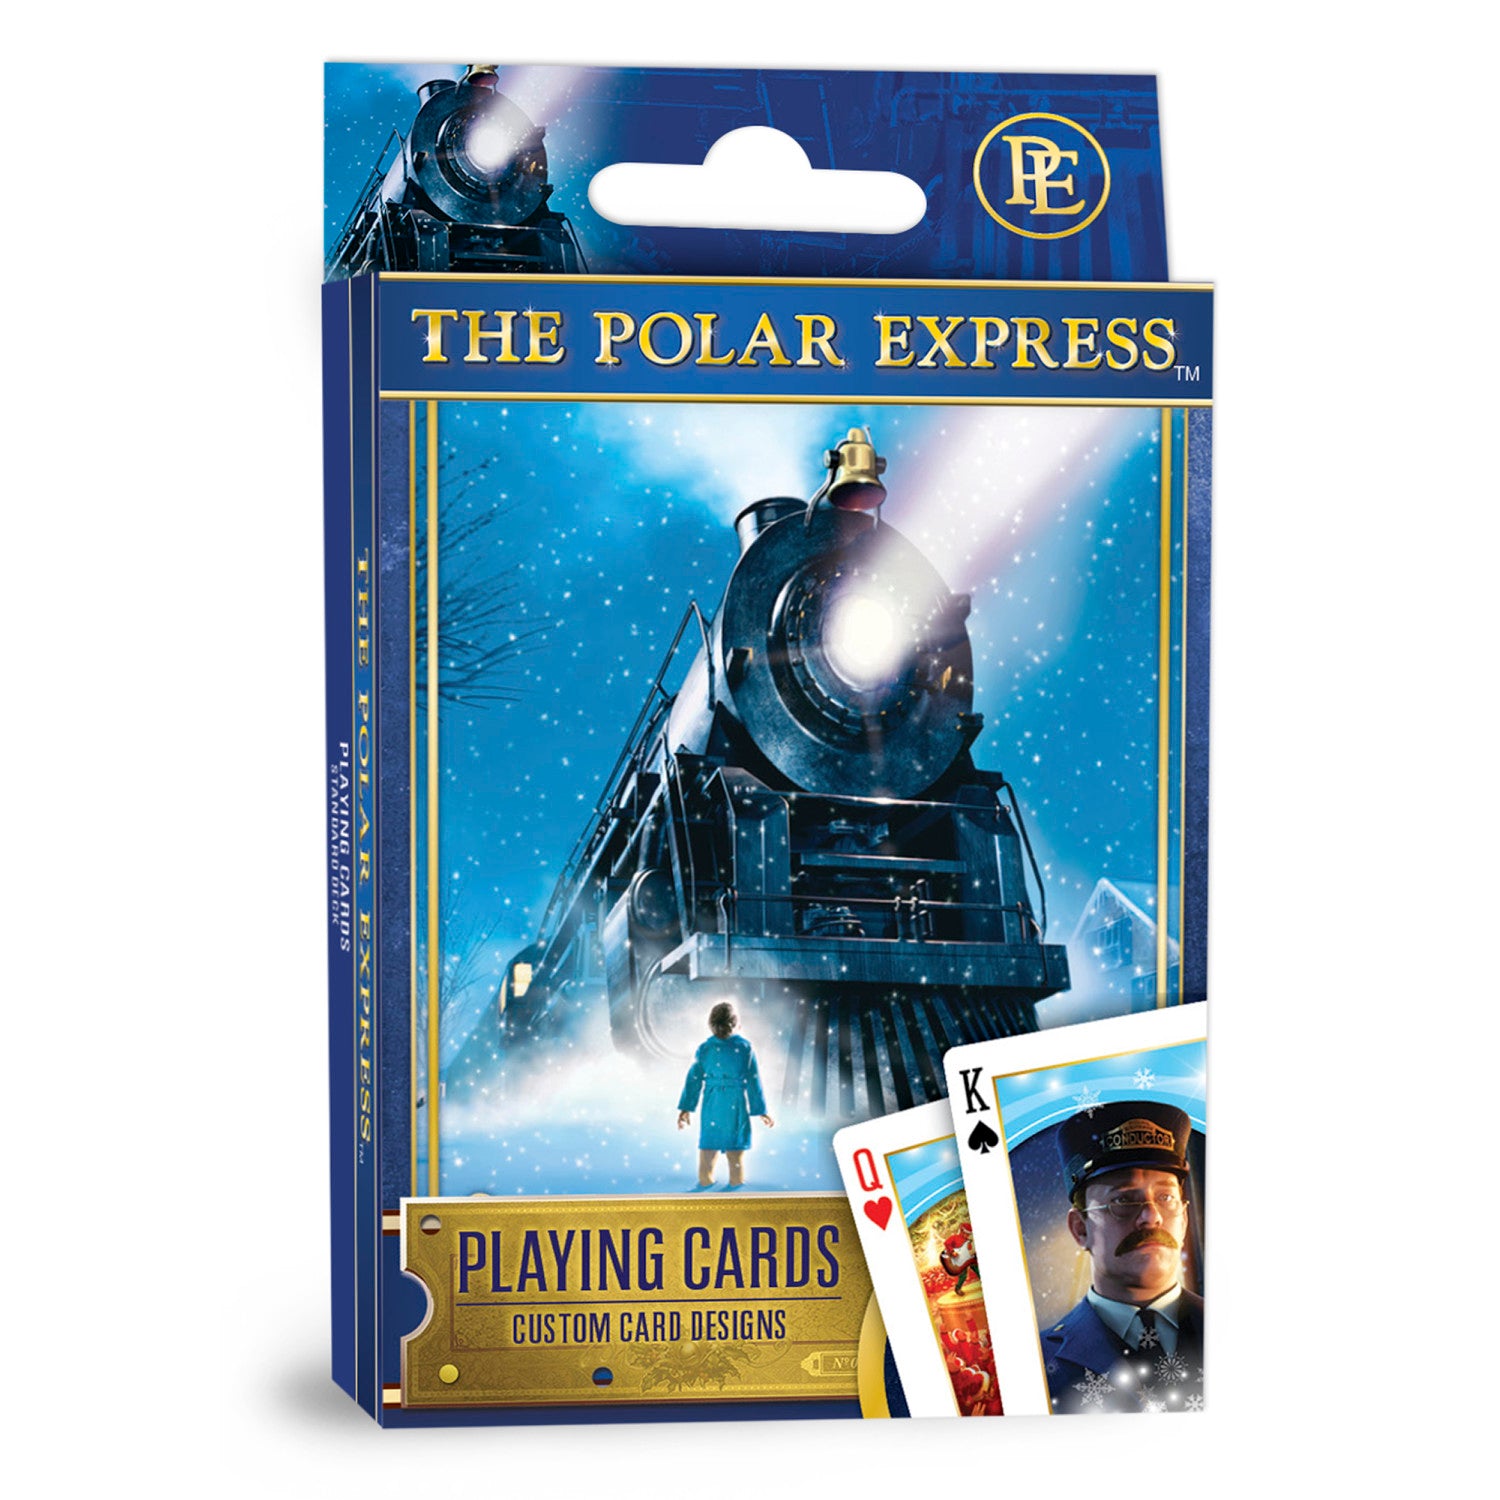 The Polar Express Playing Cards - 54 Card Deck